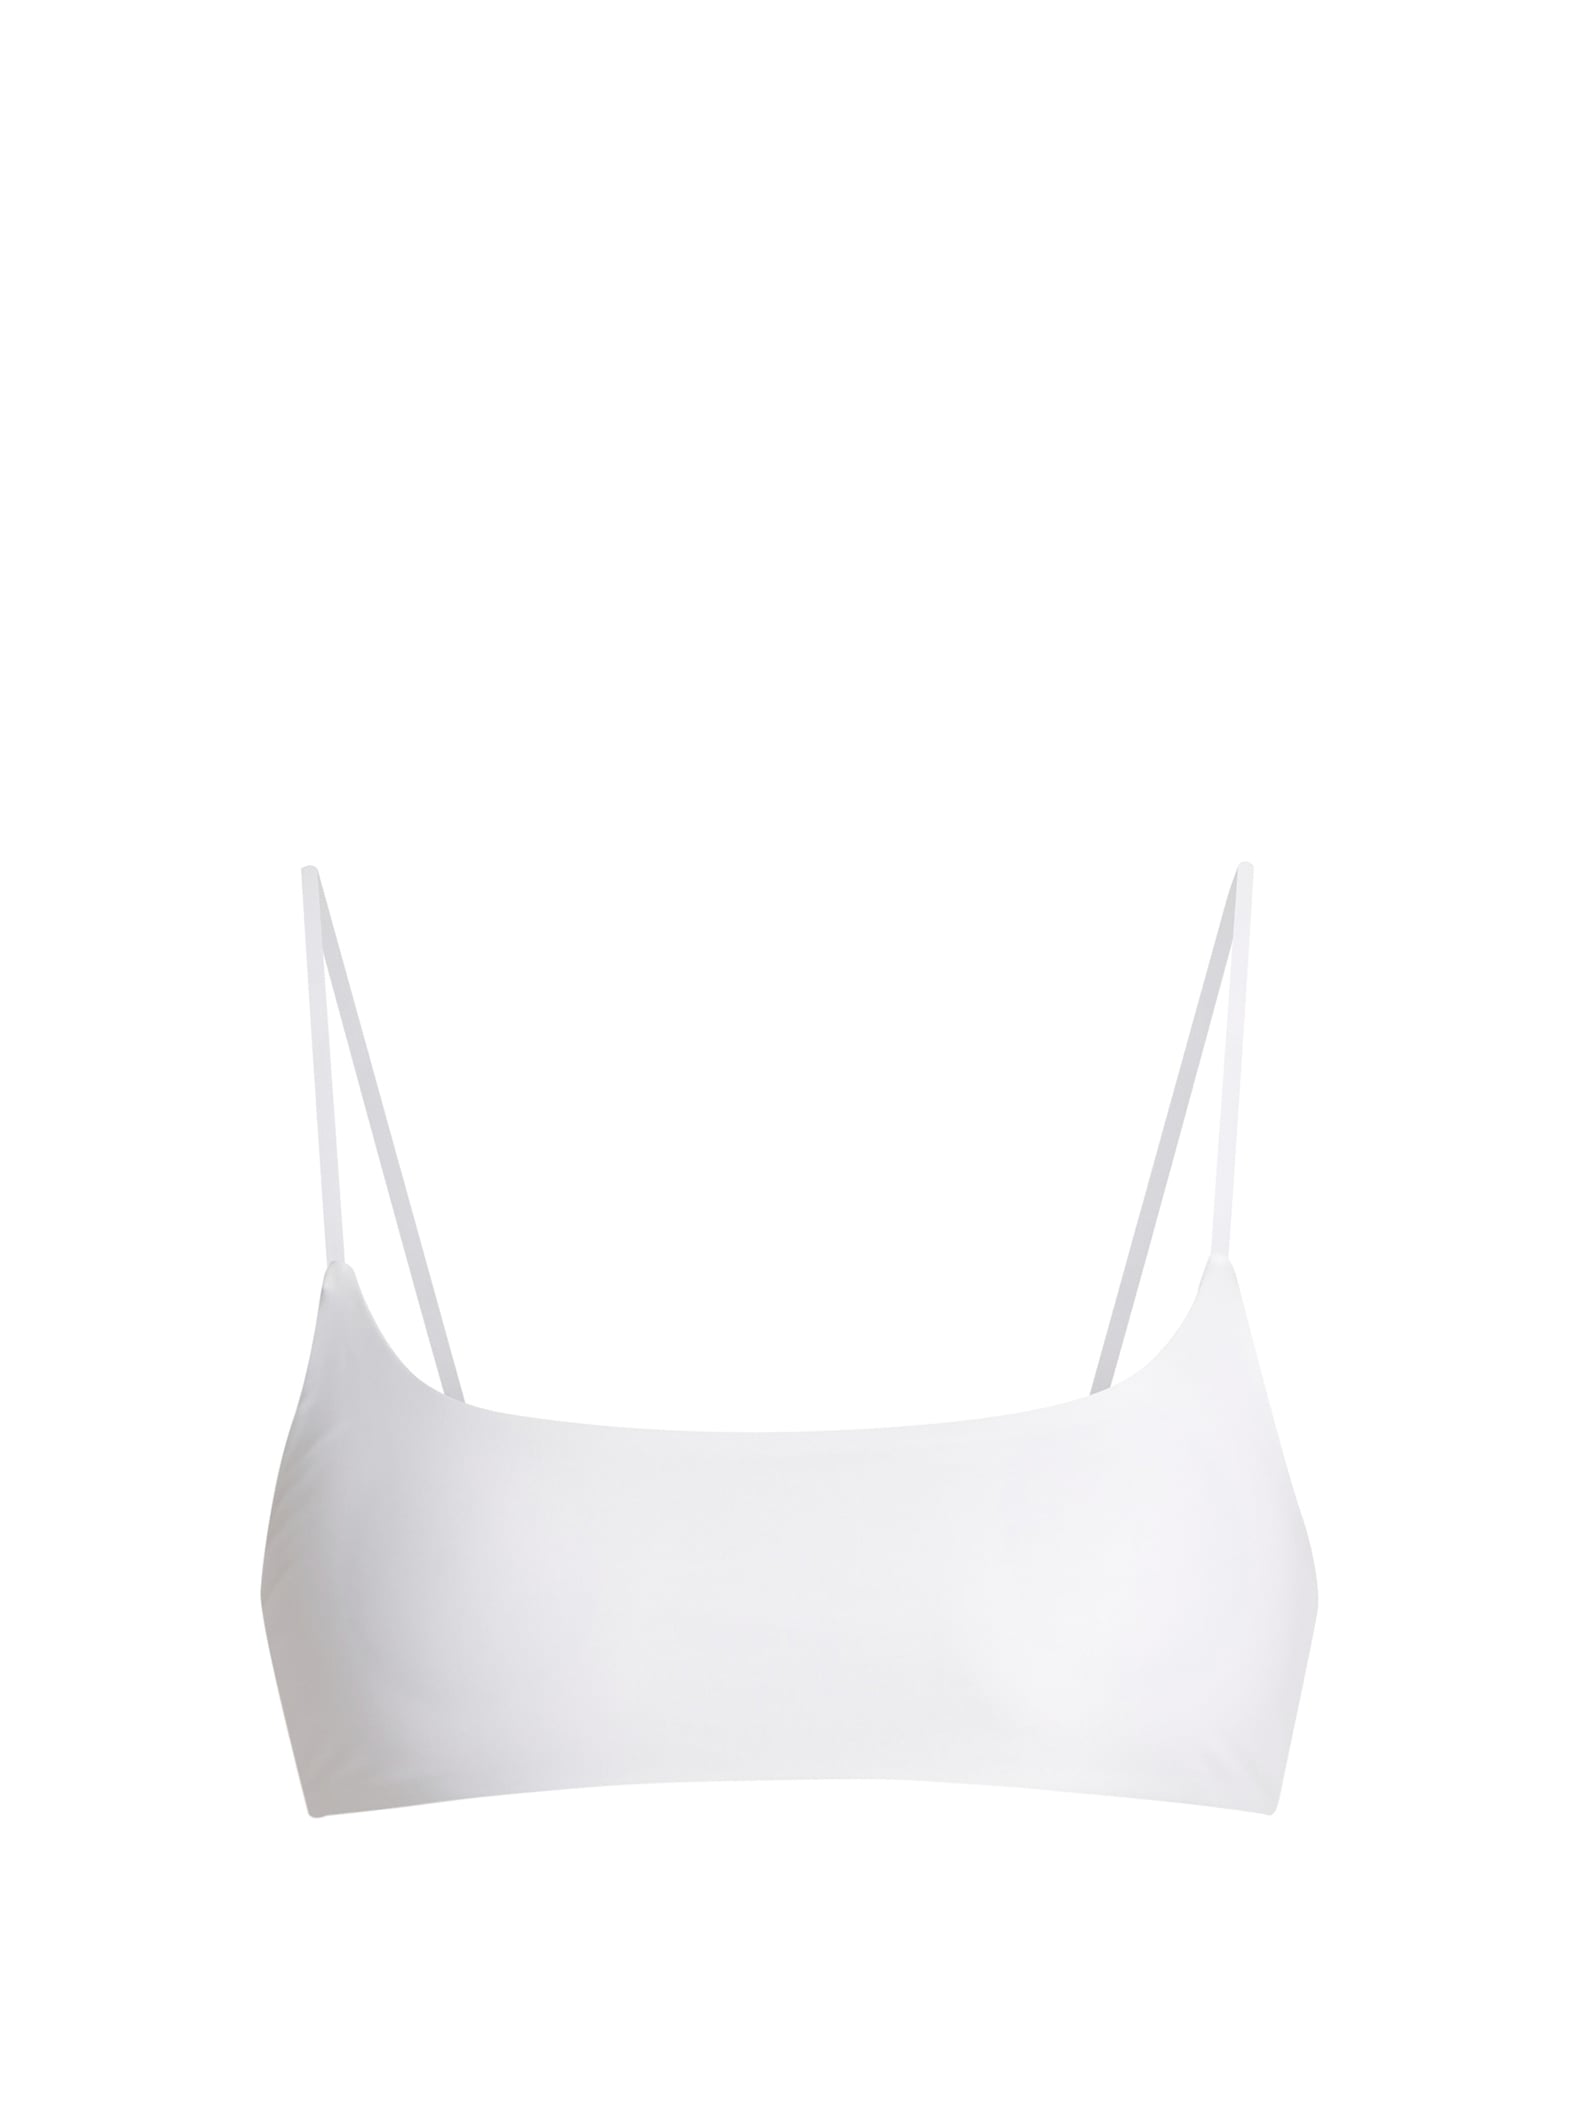 Emily Ratajkowski Wearing White Bikini | POPSUGAR Fashion